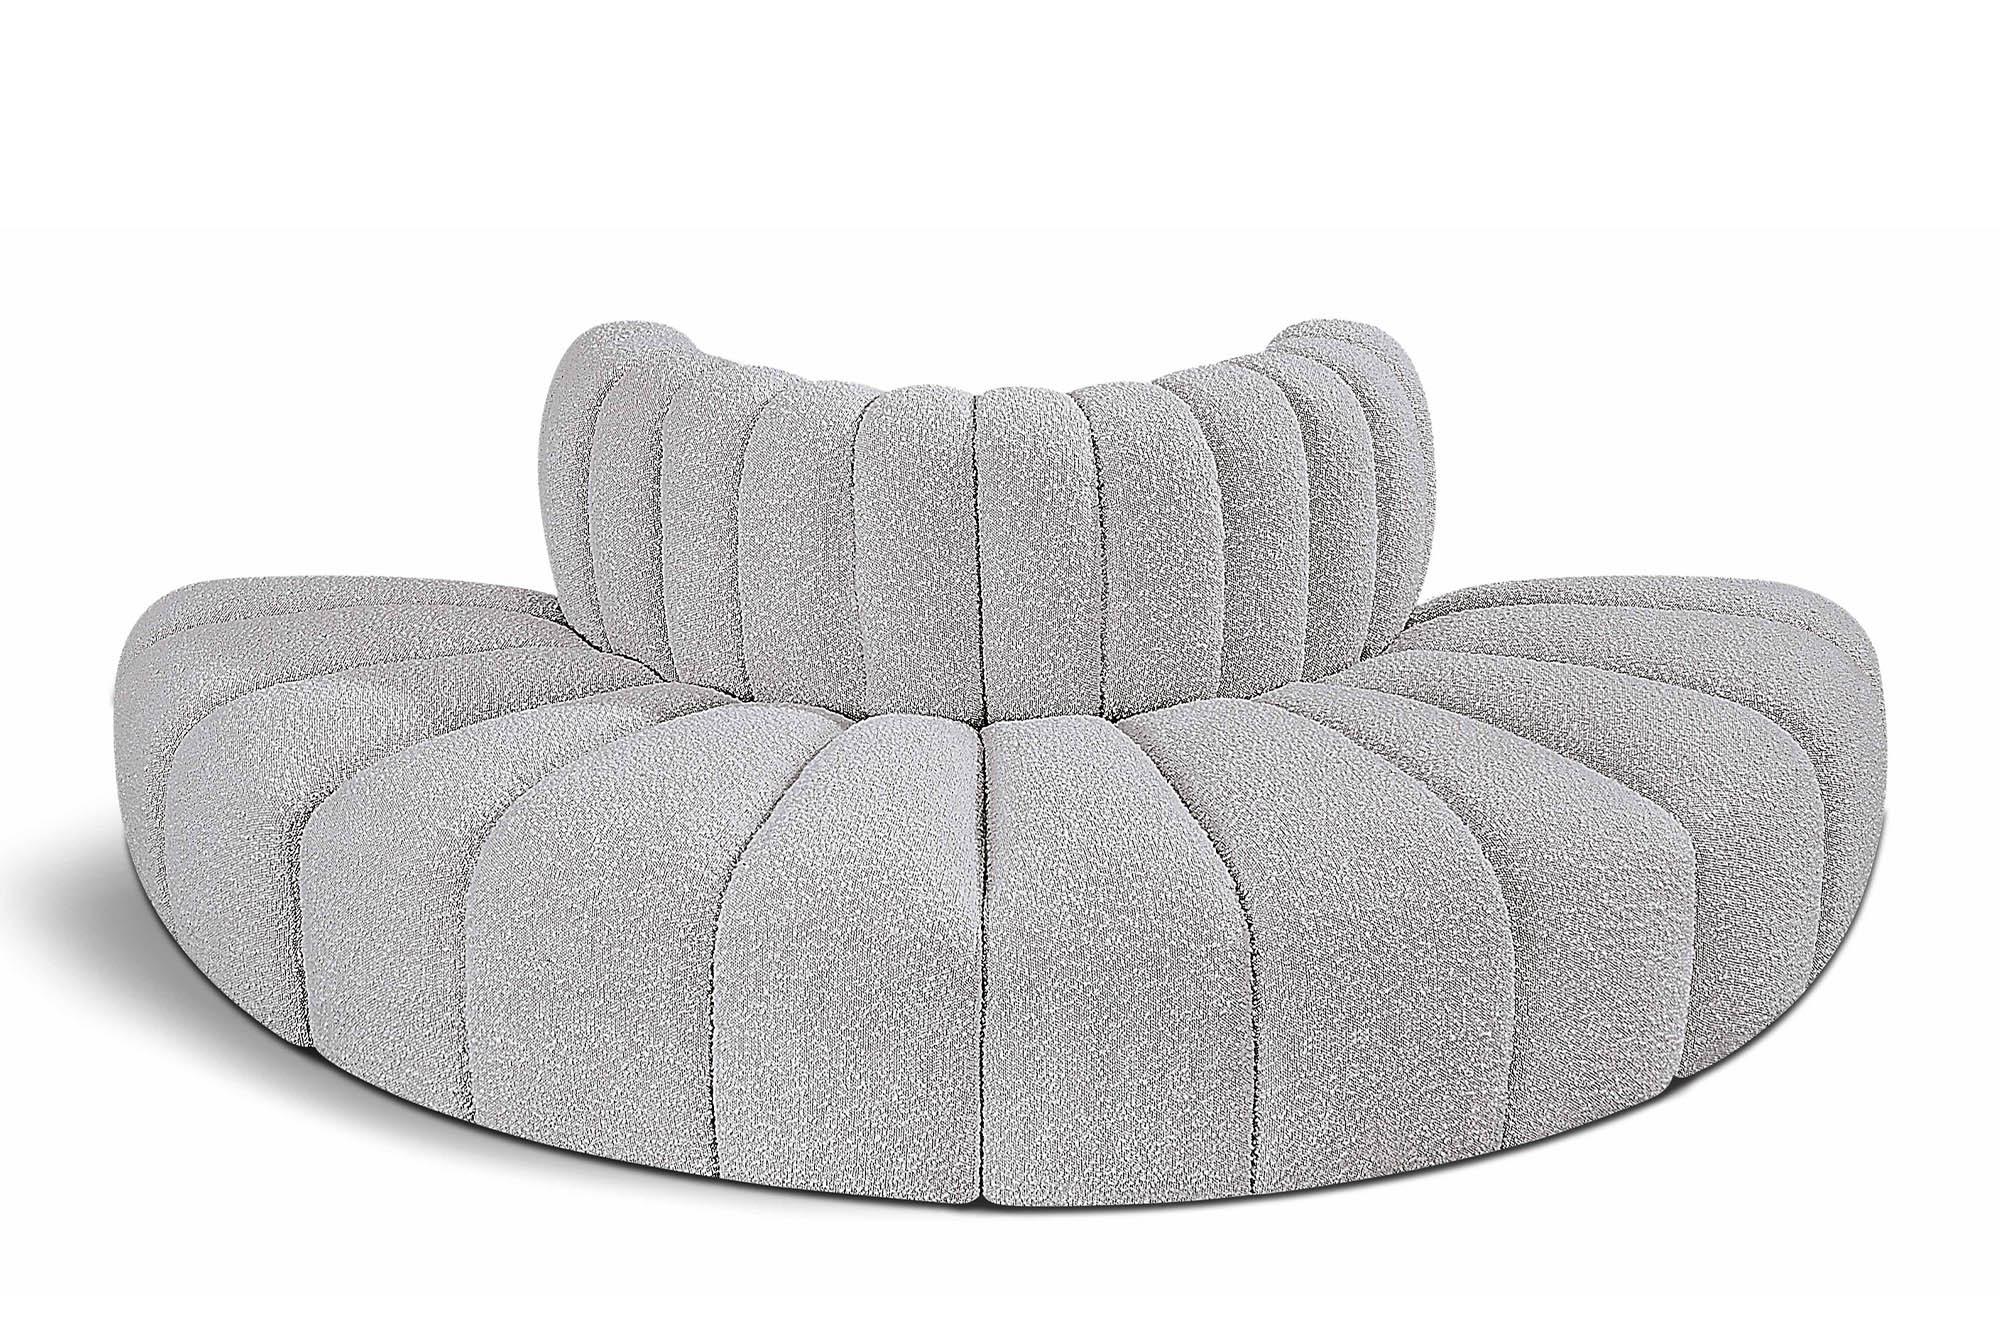 Contemporary, Modern Modular Sectional Sofa ARC 102Grey-S4G 102Grey-S4G in Gray 